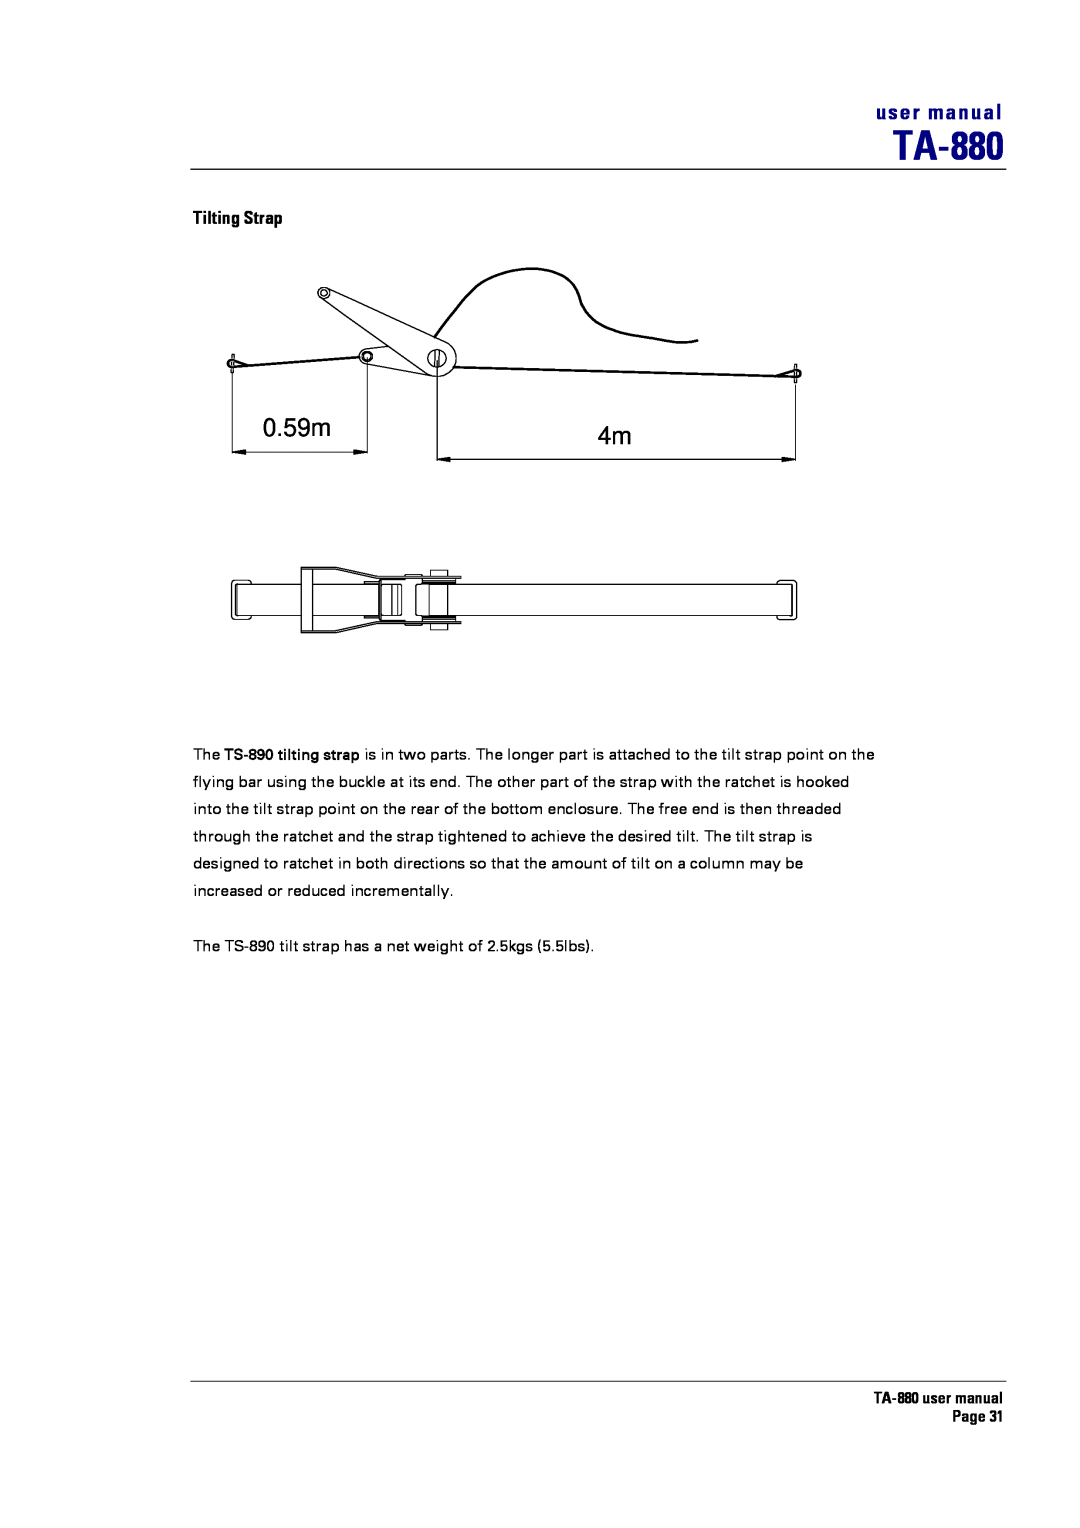 Turbosound TA-880 user manual Tilting Strap, 0.59m 